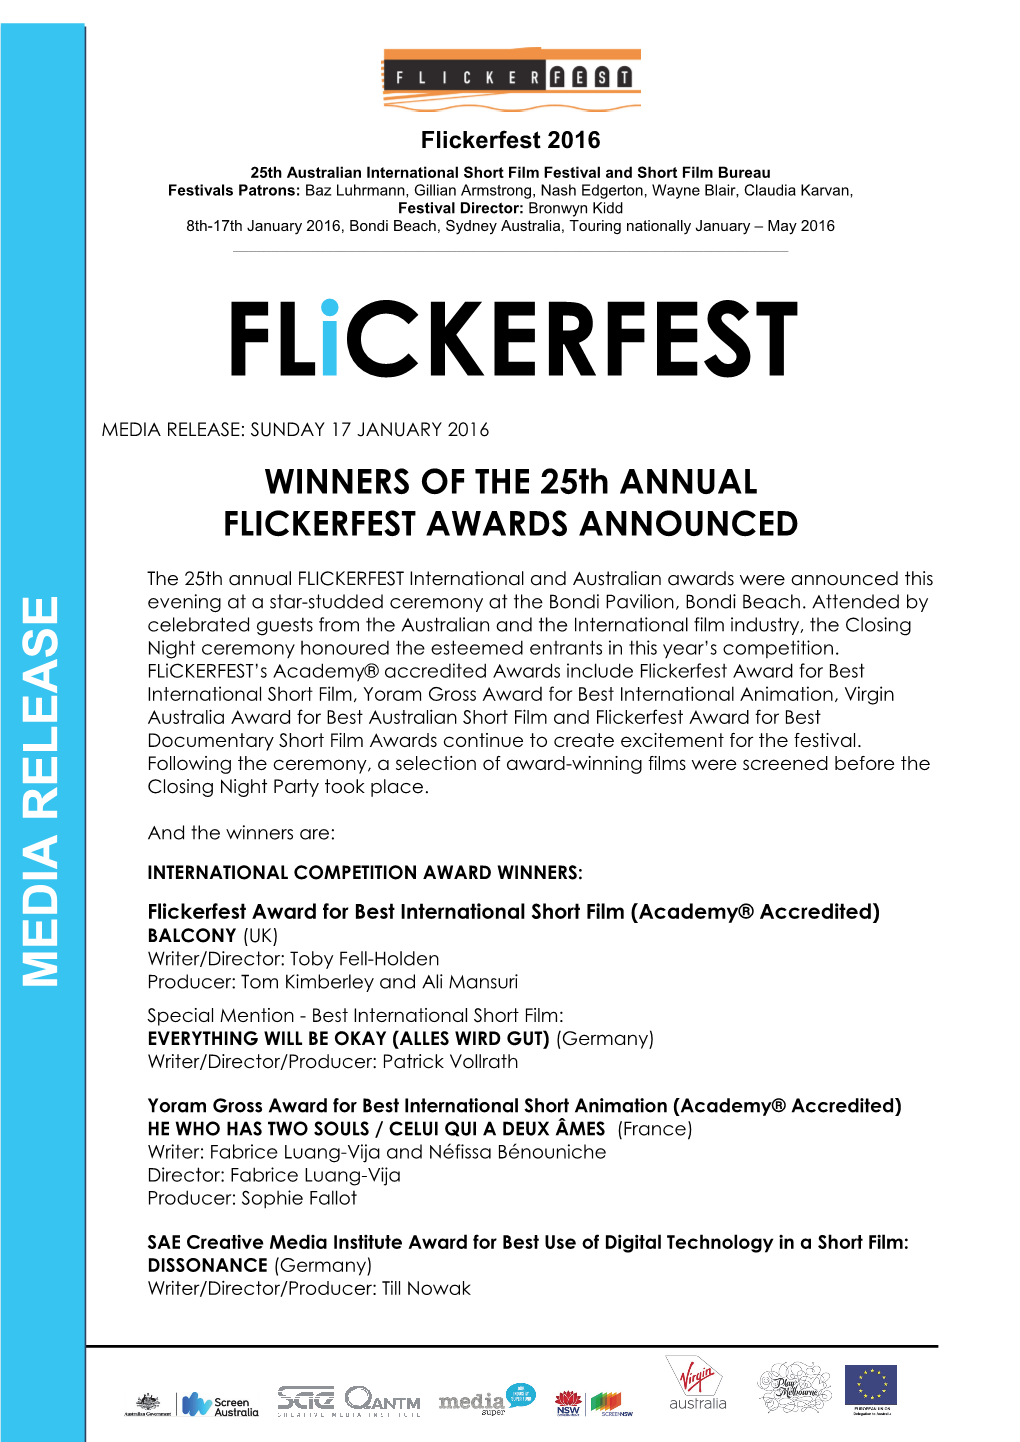 Flickerfest 2016 Award Announcements